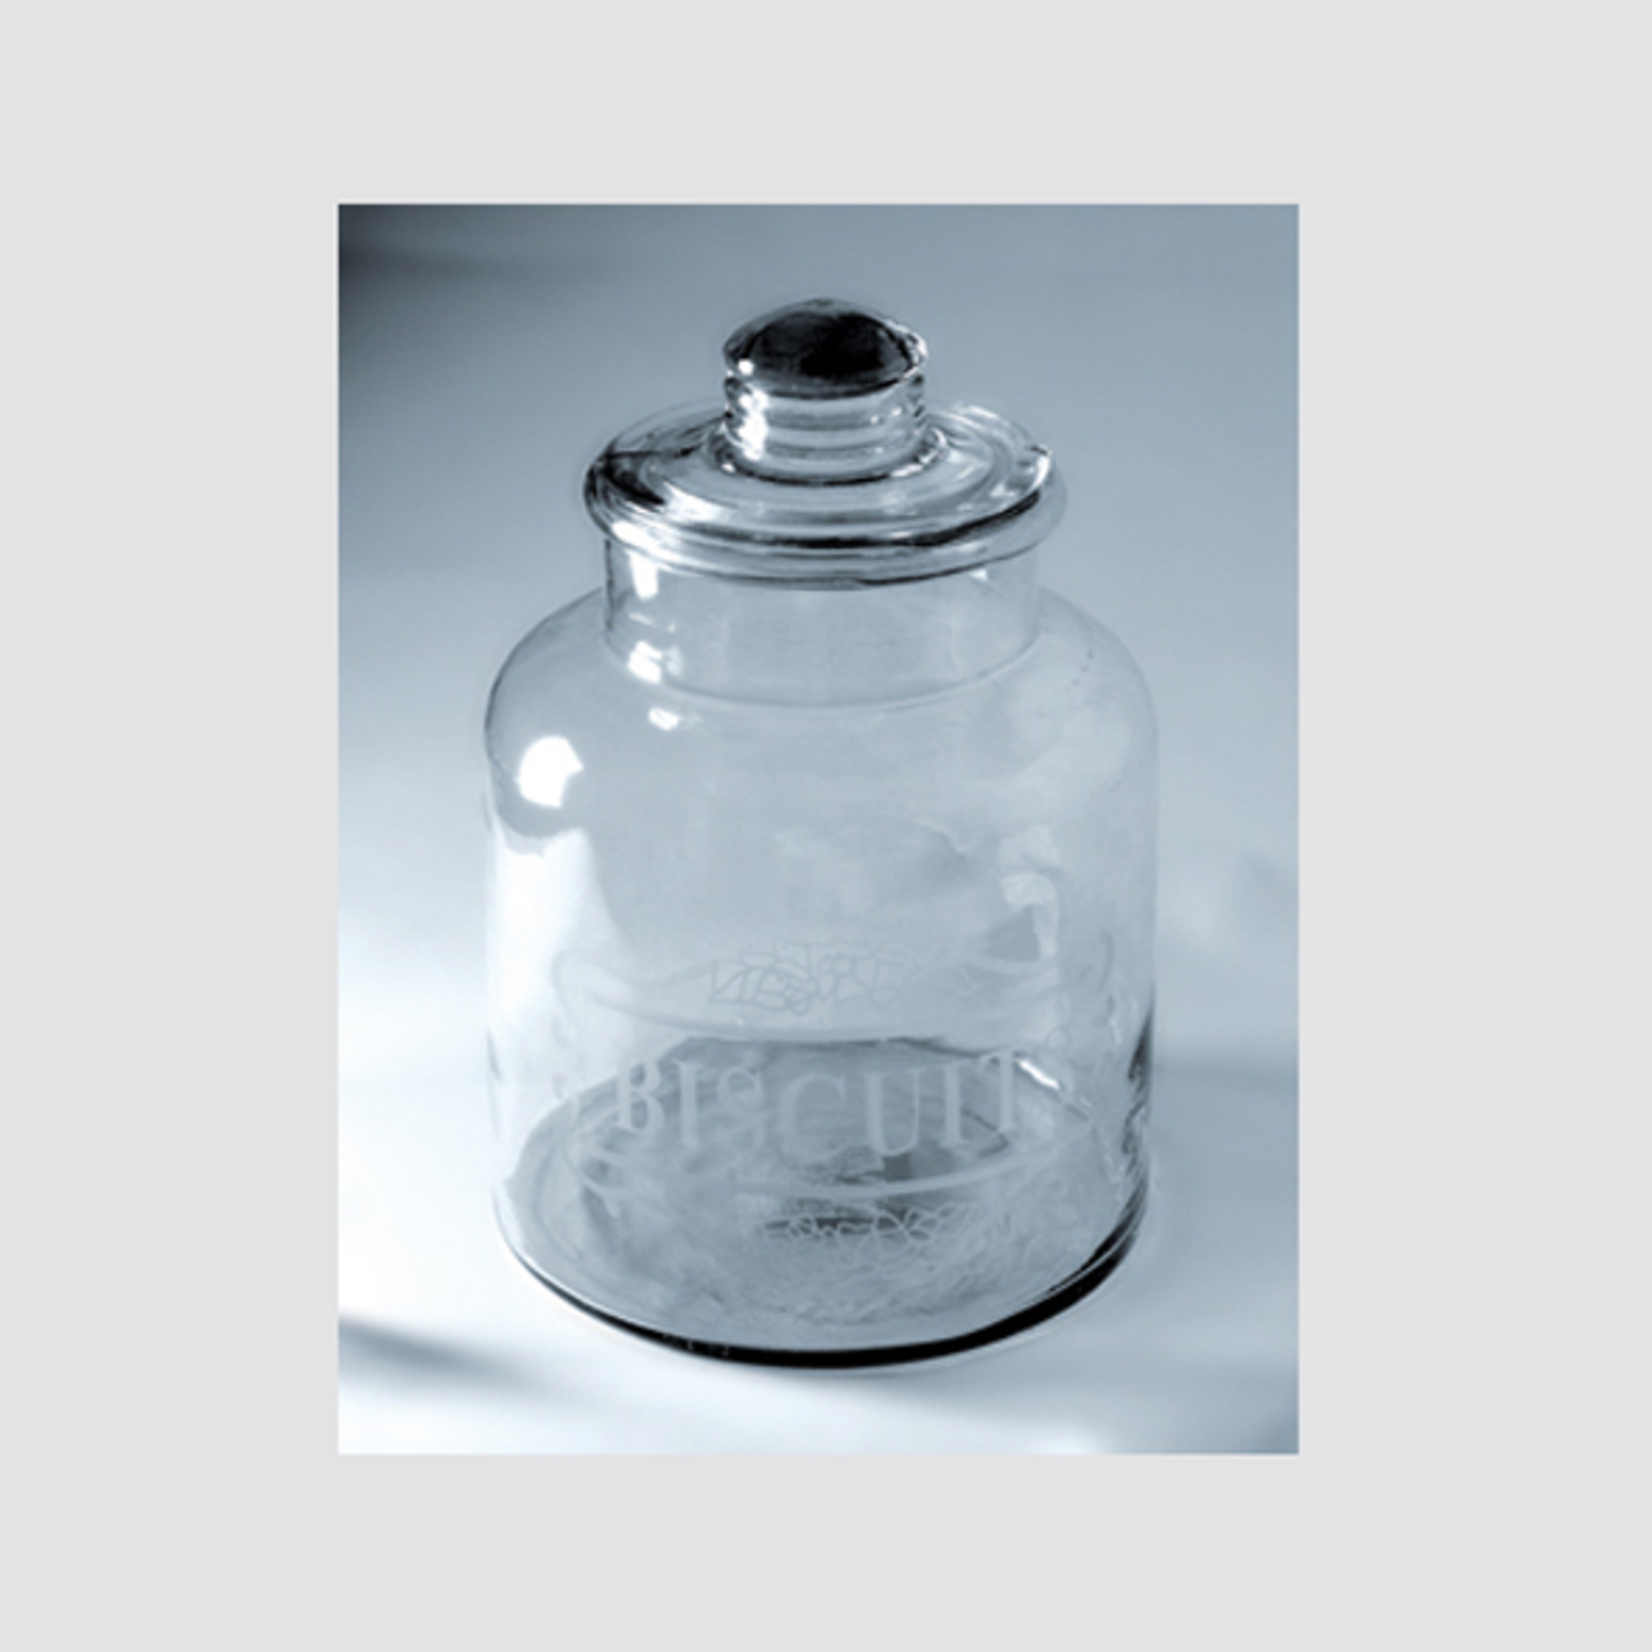 ANTIC LINE BISCUITS GLASS JAR